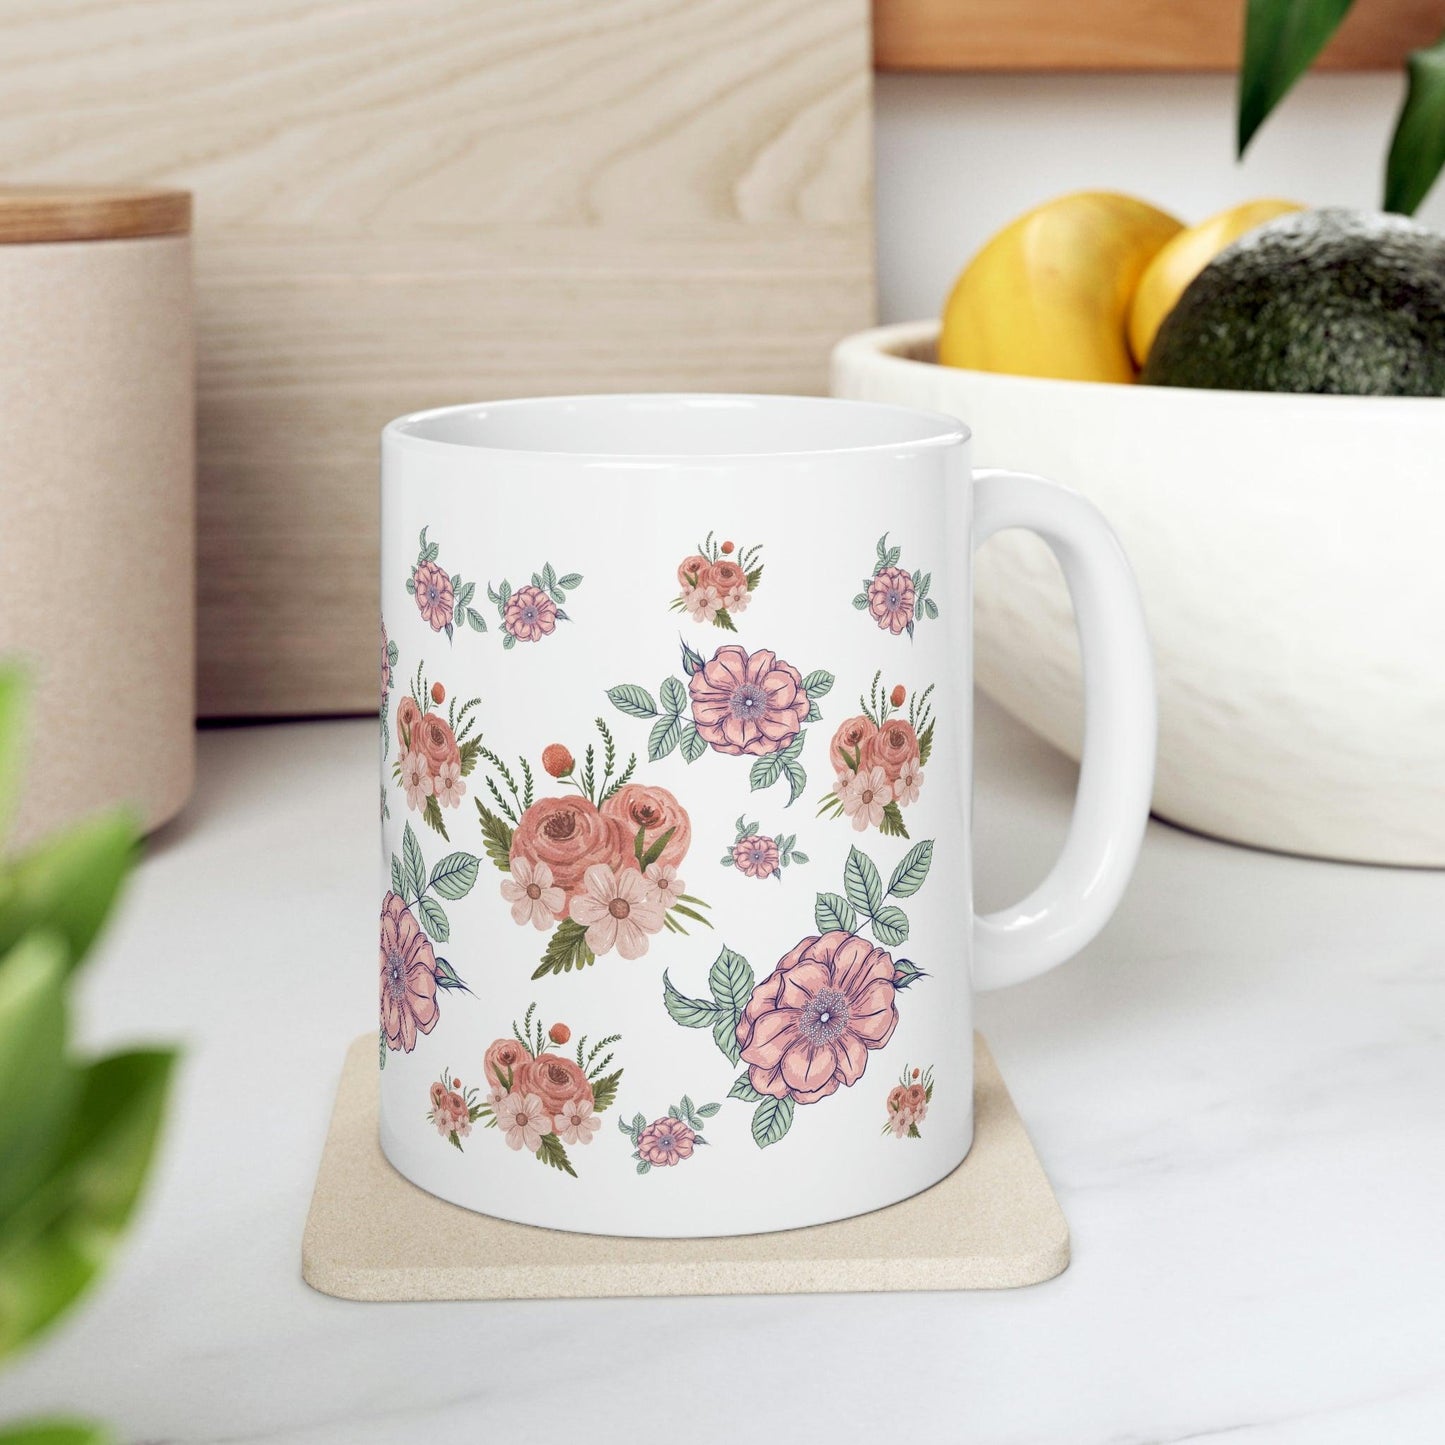 Vintage Floral Mug, gift for mom on mothers day, Birthday gift for mom, gift for plant lovers, hot cocoa mug, gift for coffee lover - Giftsmojo